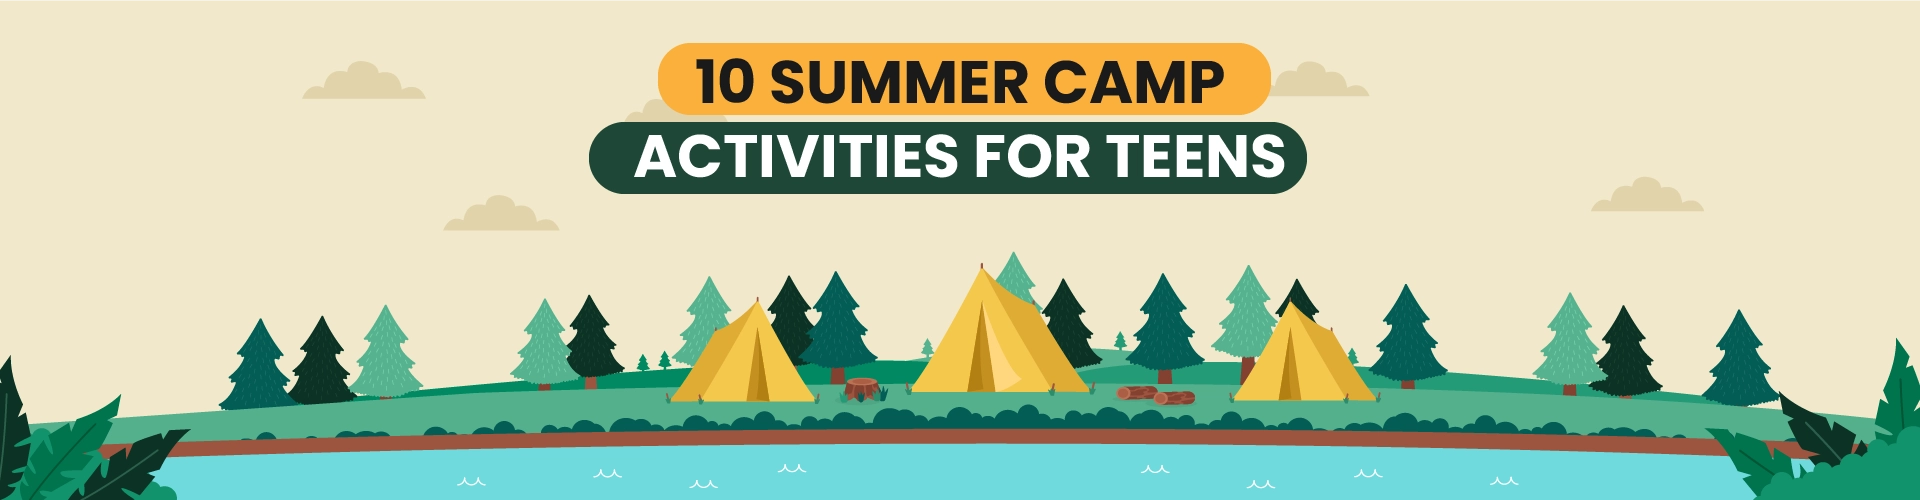 Summer Camp Activities for Teens